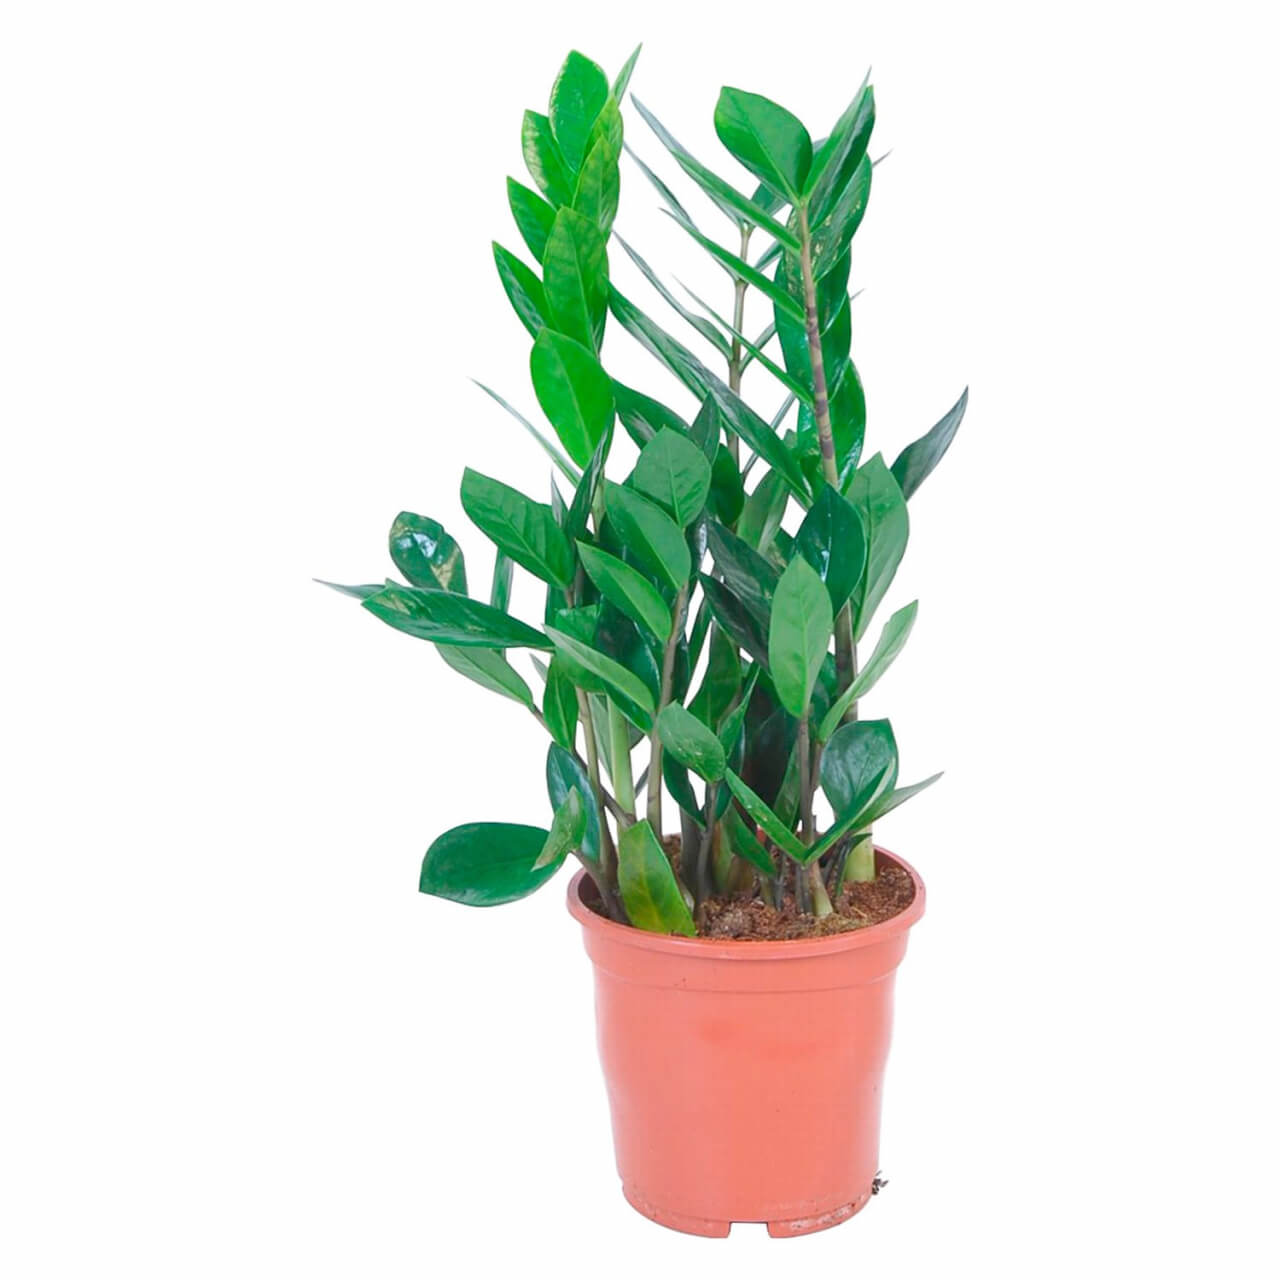 Beltéri - Agglegényvirág  (Zamioculcas zamiifolia)